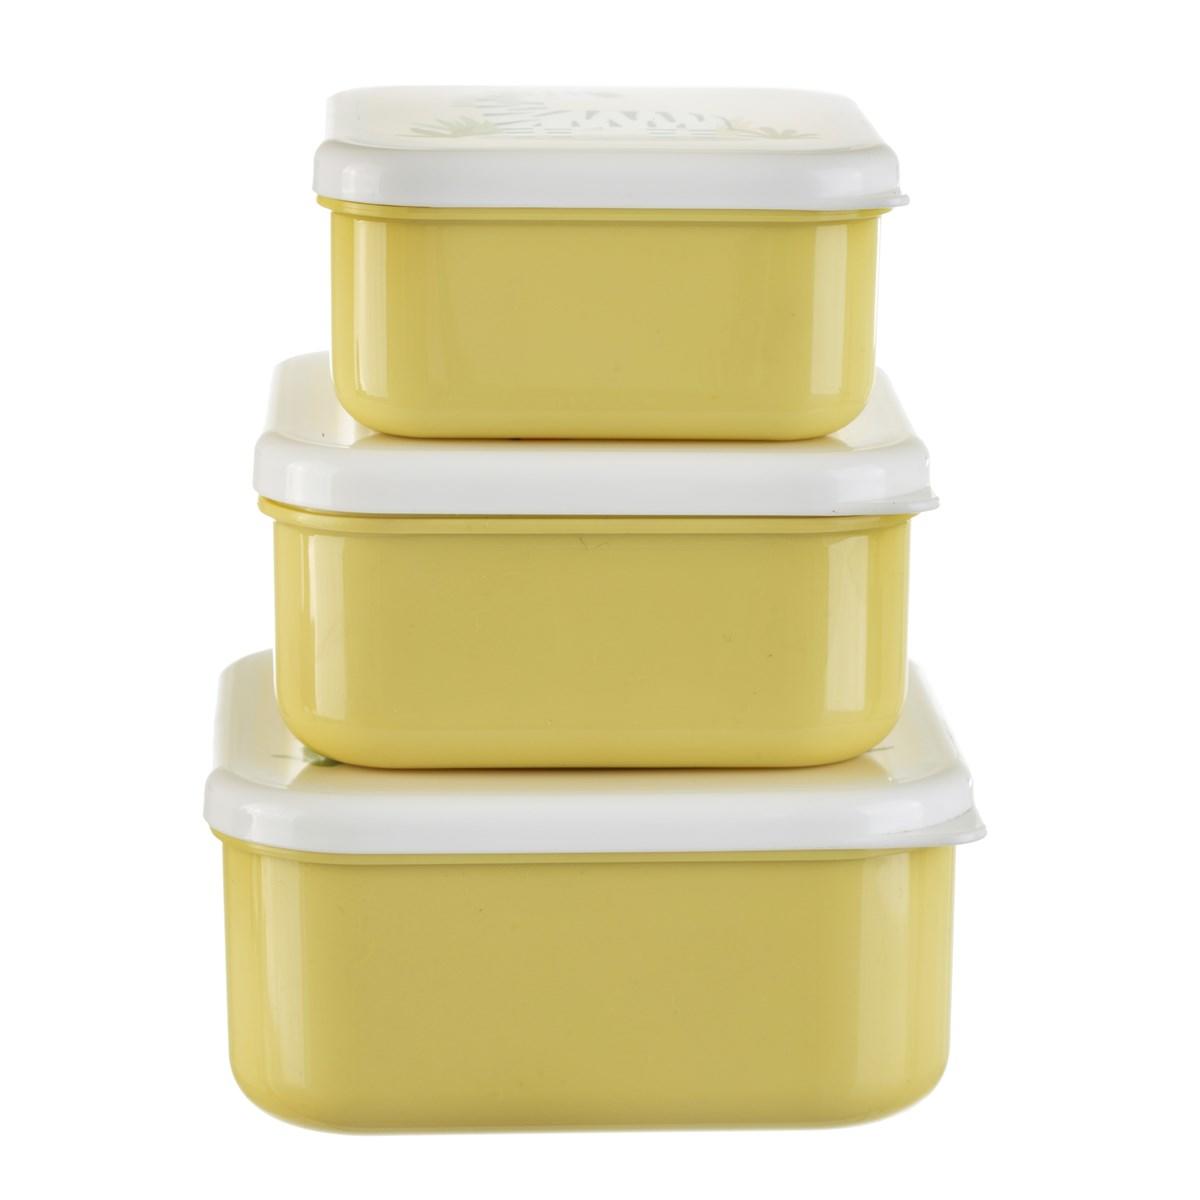 New Wipe Clean Savannah Safari Lunch Boxes - Set of 3 #4